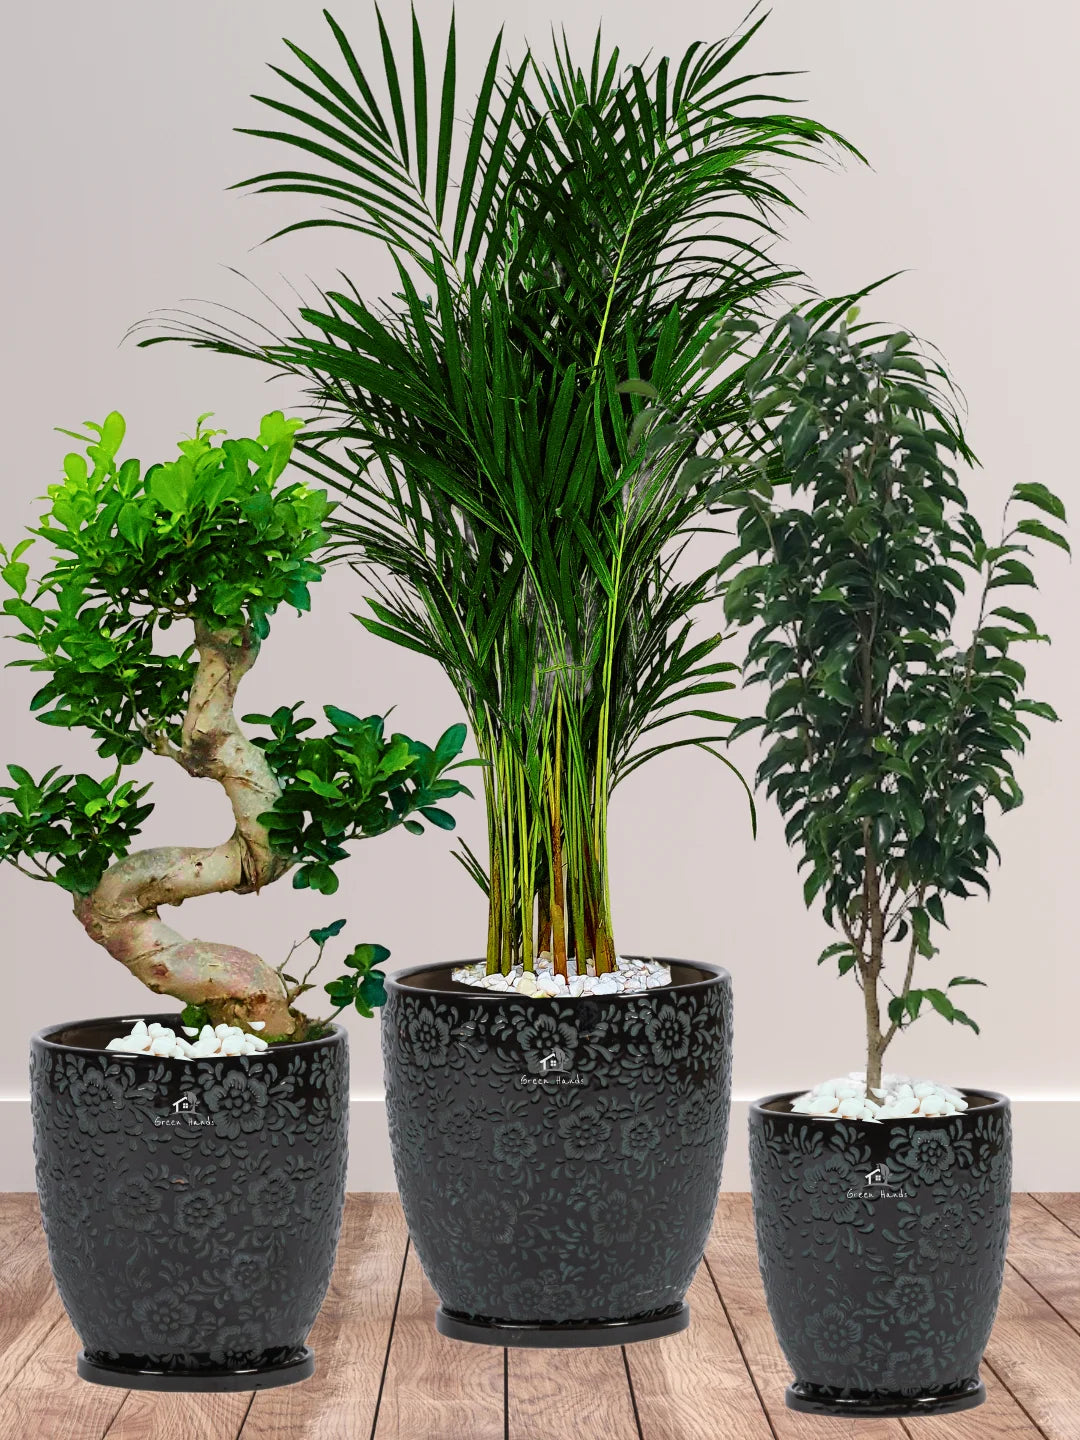 Premium Plants Bundle - Areca Palm, Ficus Benjamina, S Bonsai Tree in Glossy White Ceramic Pots